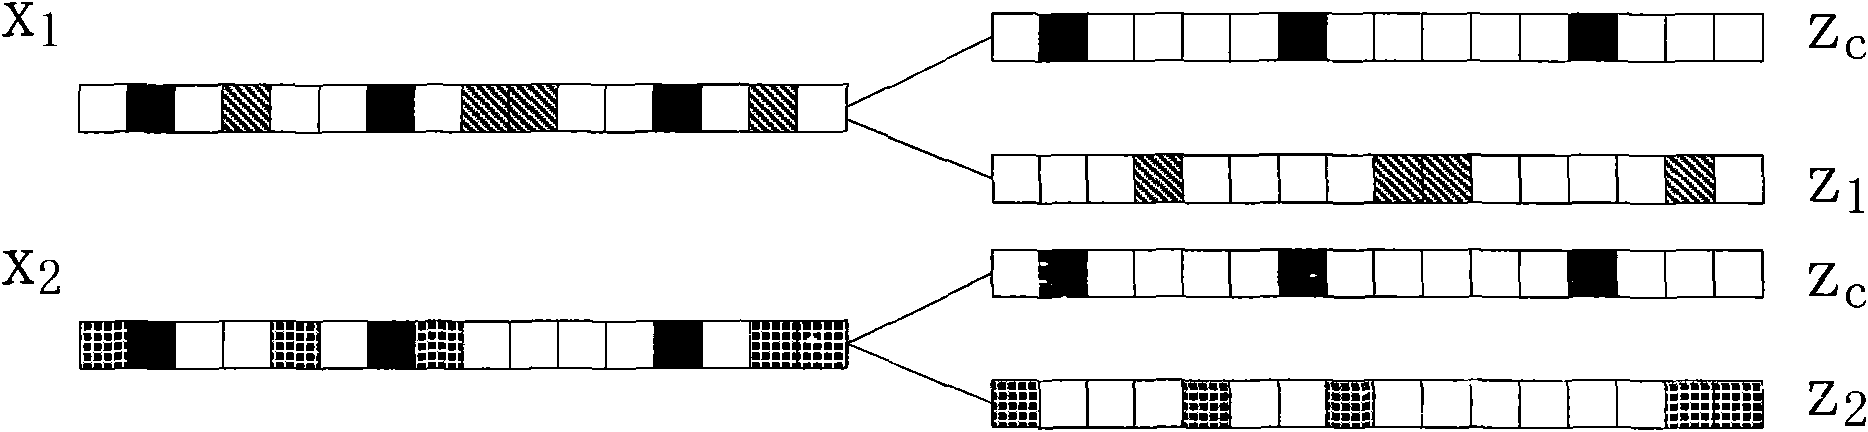 Signal source encoding method based on distributed compressive sensing technology